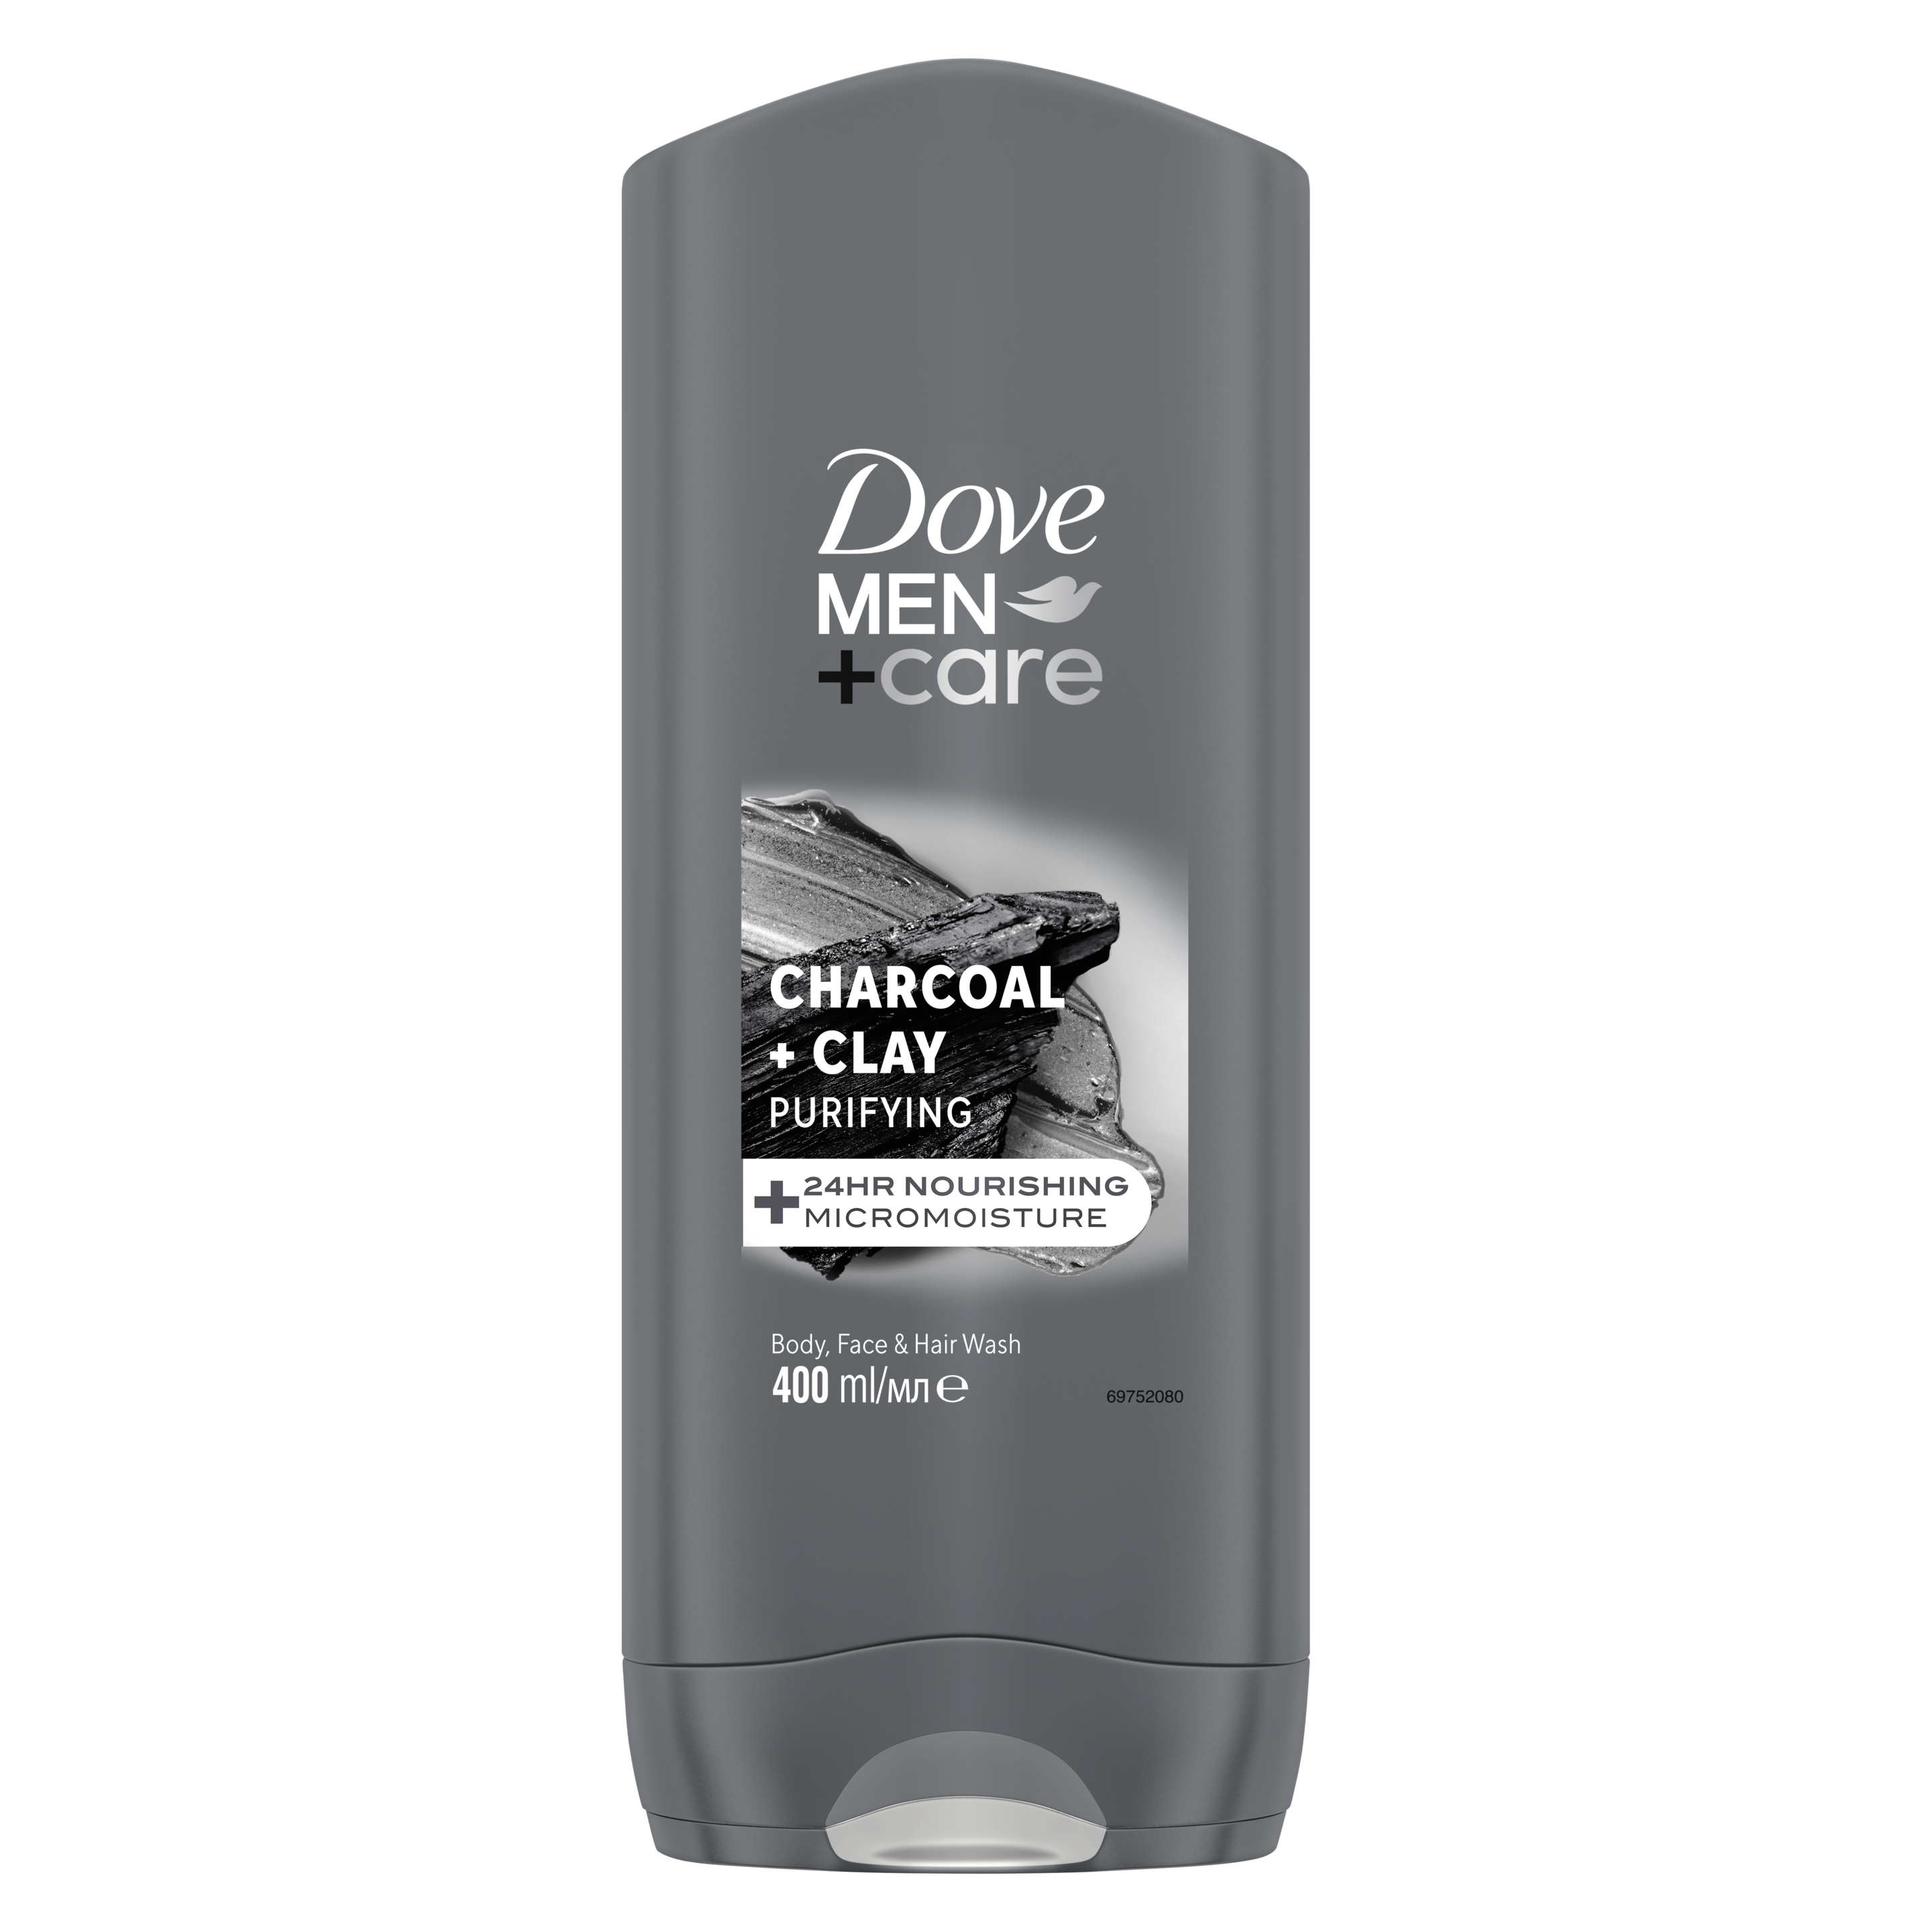 Dove Men+Care Charcoal & Clay tusfürdő testre és arcra 400ml